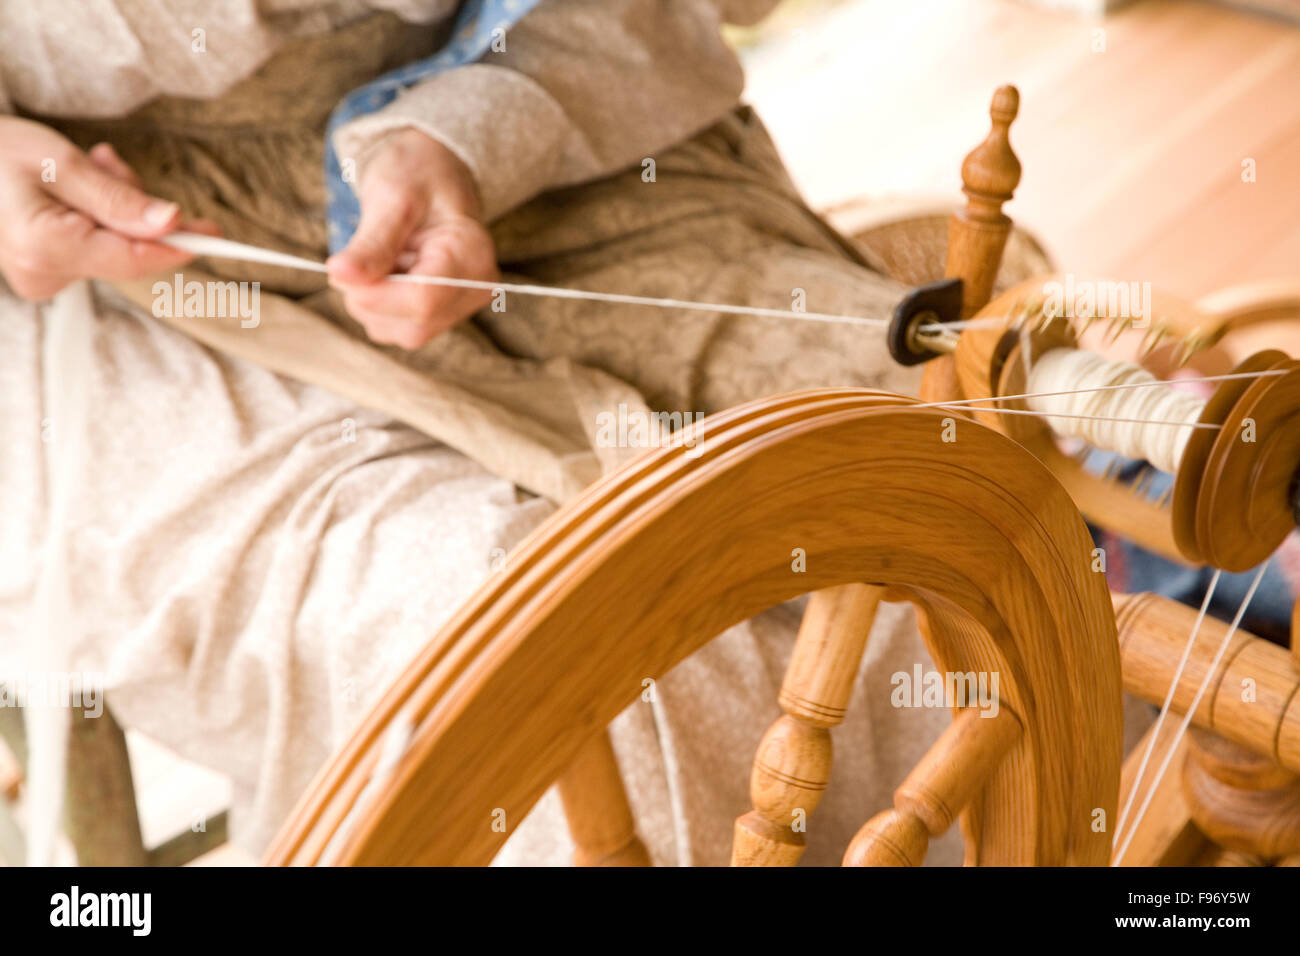 Spinning Wheel For Making Yarn From Wool Fibers. Vintage Rustic